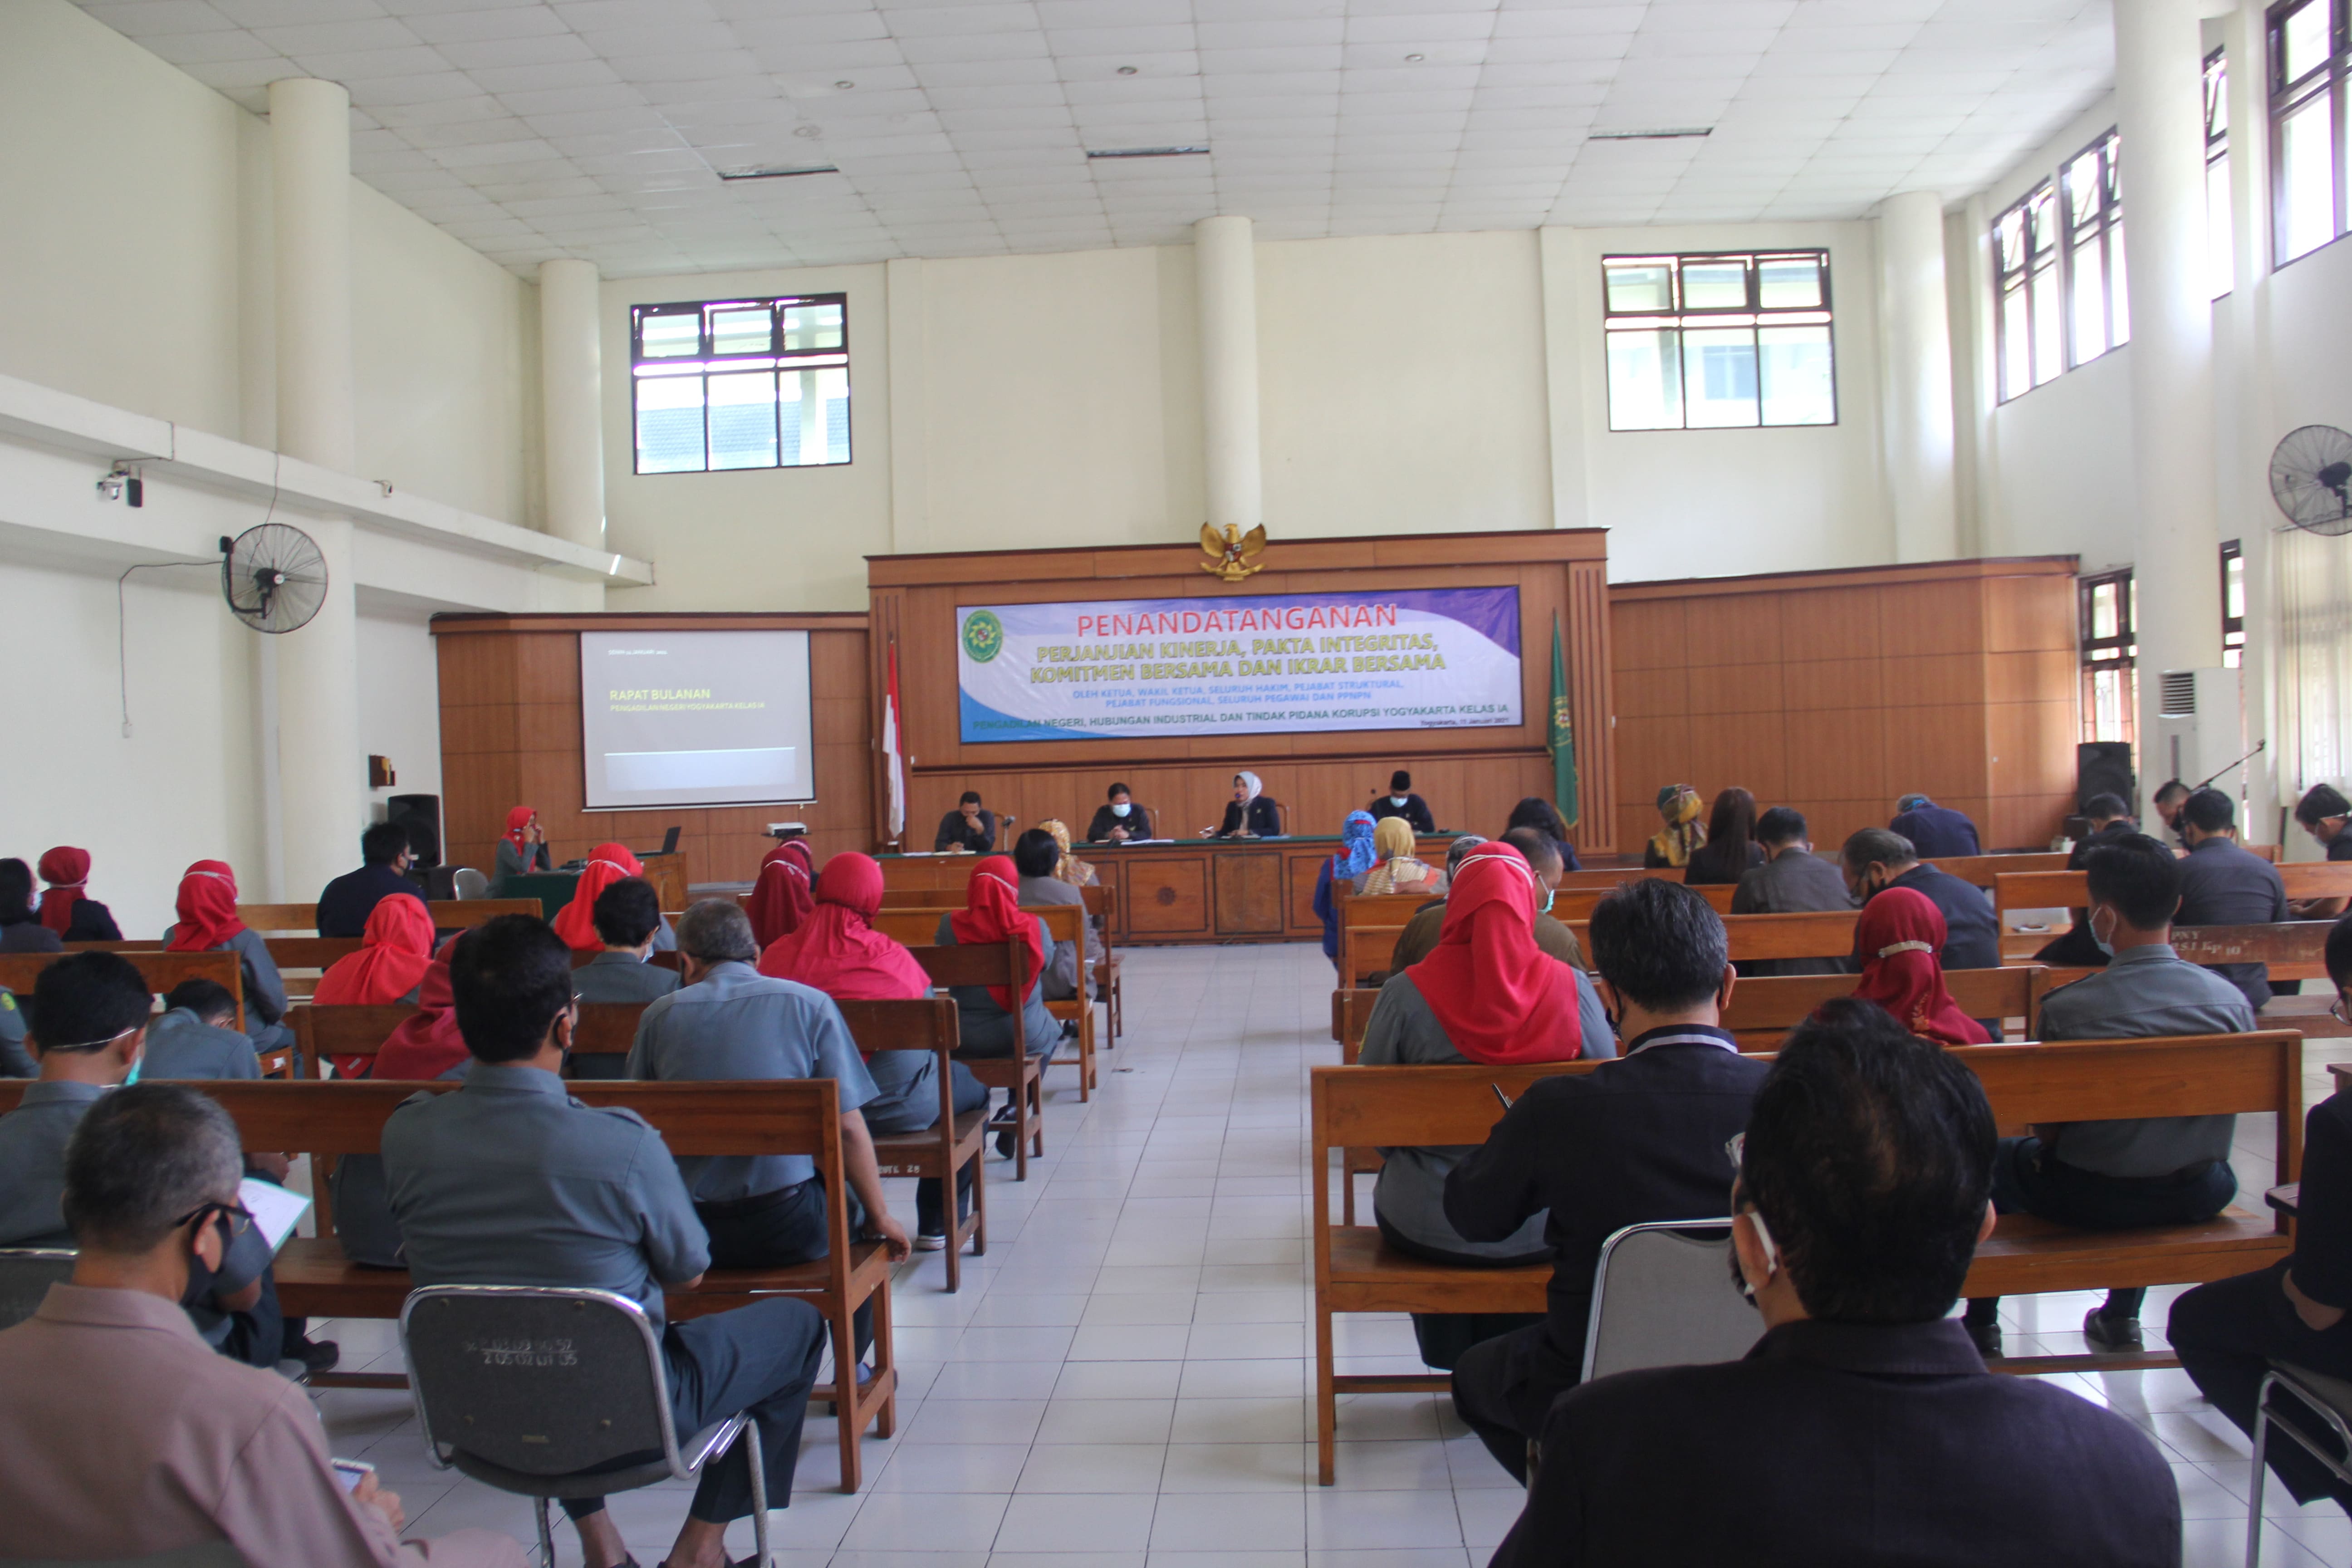 Penandatanganan Pakta Integritas dan Rapat Umum Bulan Januari 2021 serta Sosialisasi Anggaran Pengadilan Negeri Yogyakarta